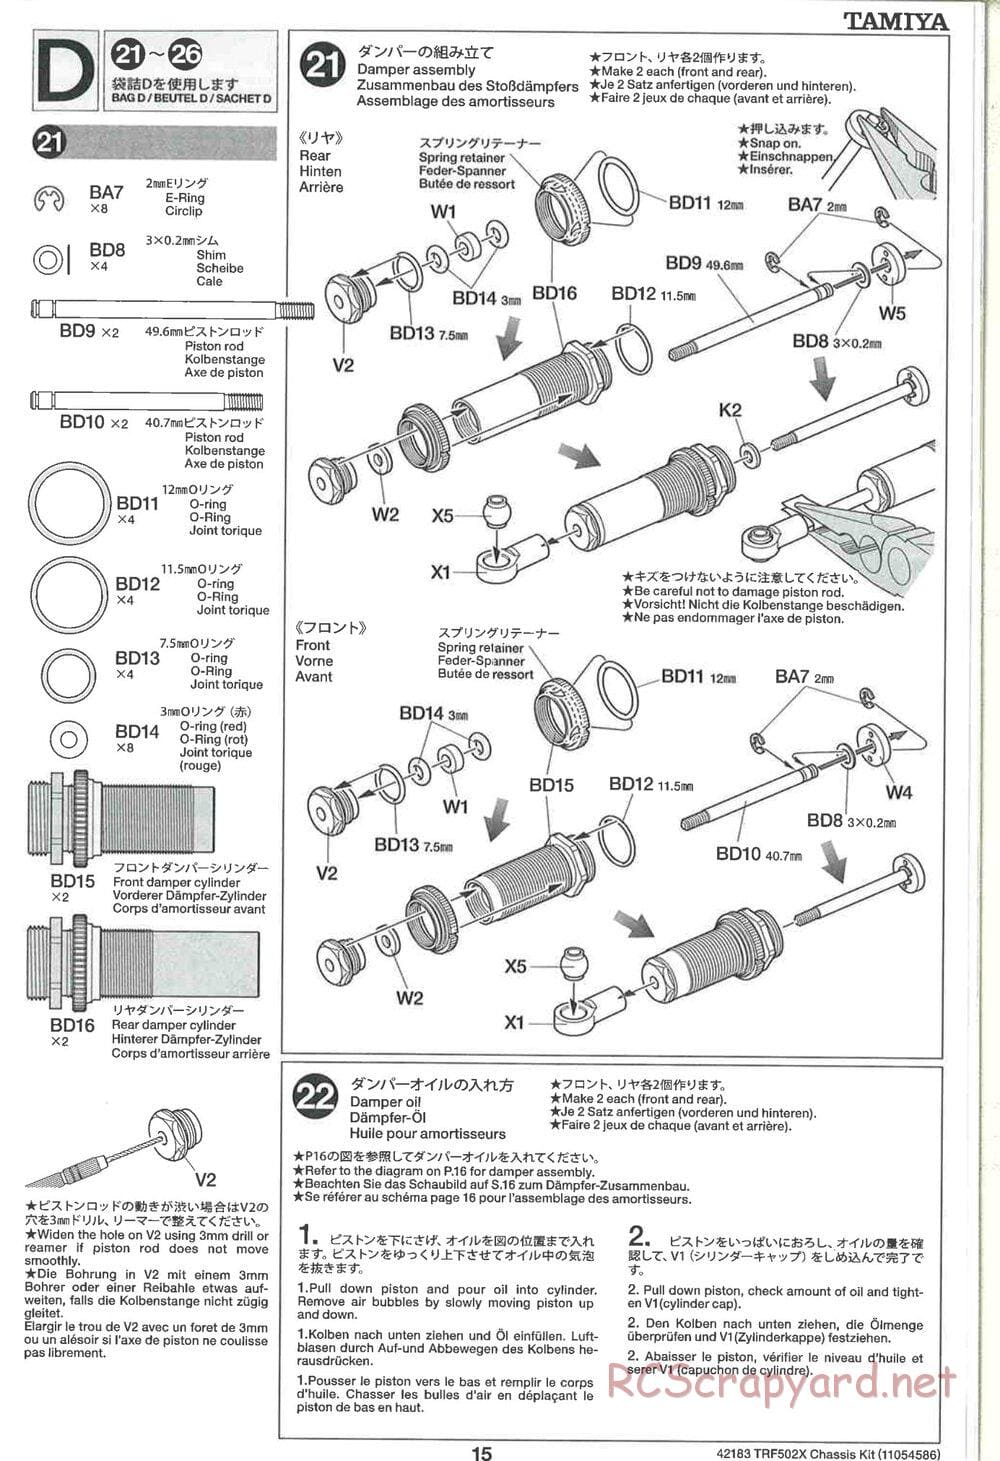 Tamiya - TRF502X Chassis - Manual - Page 15